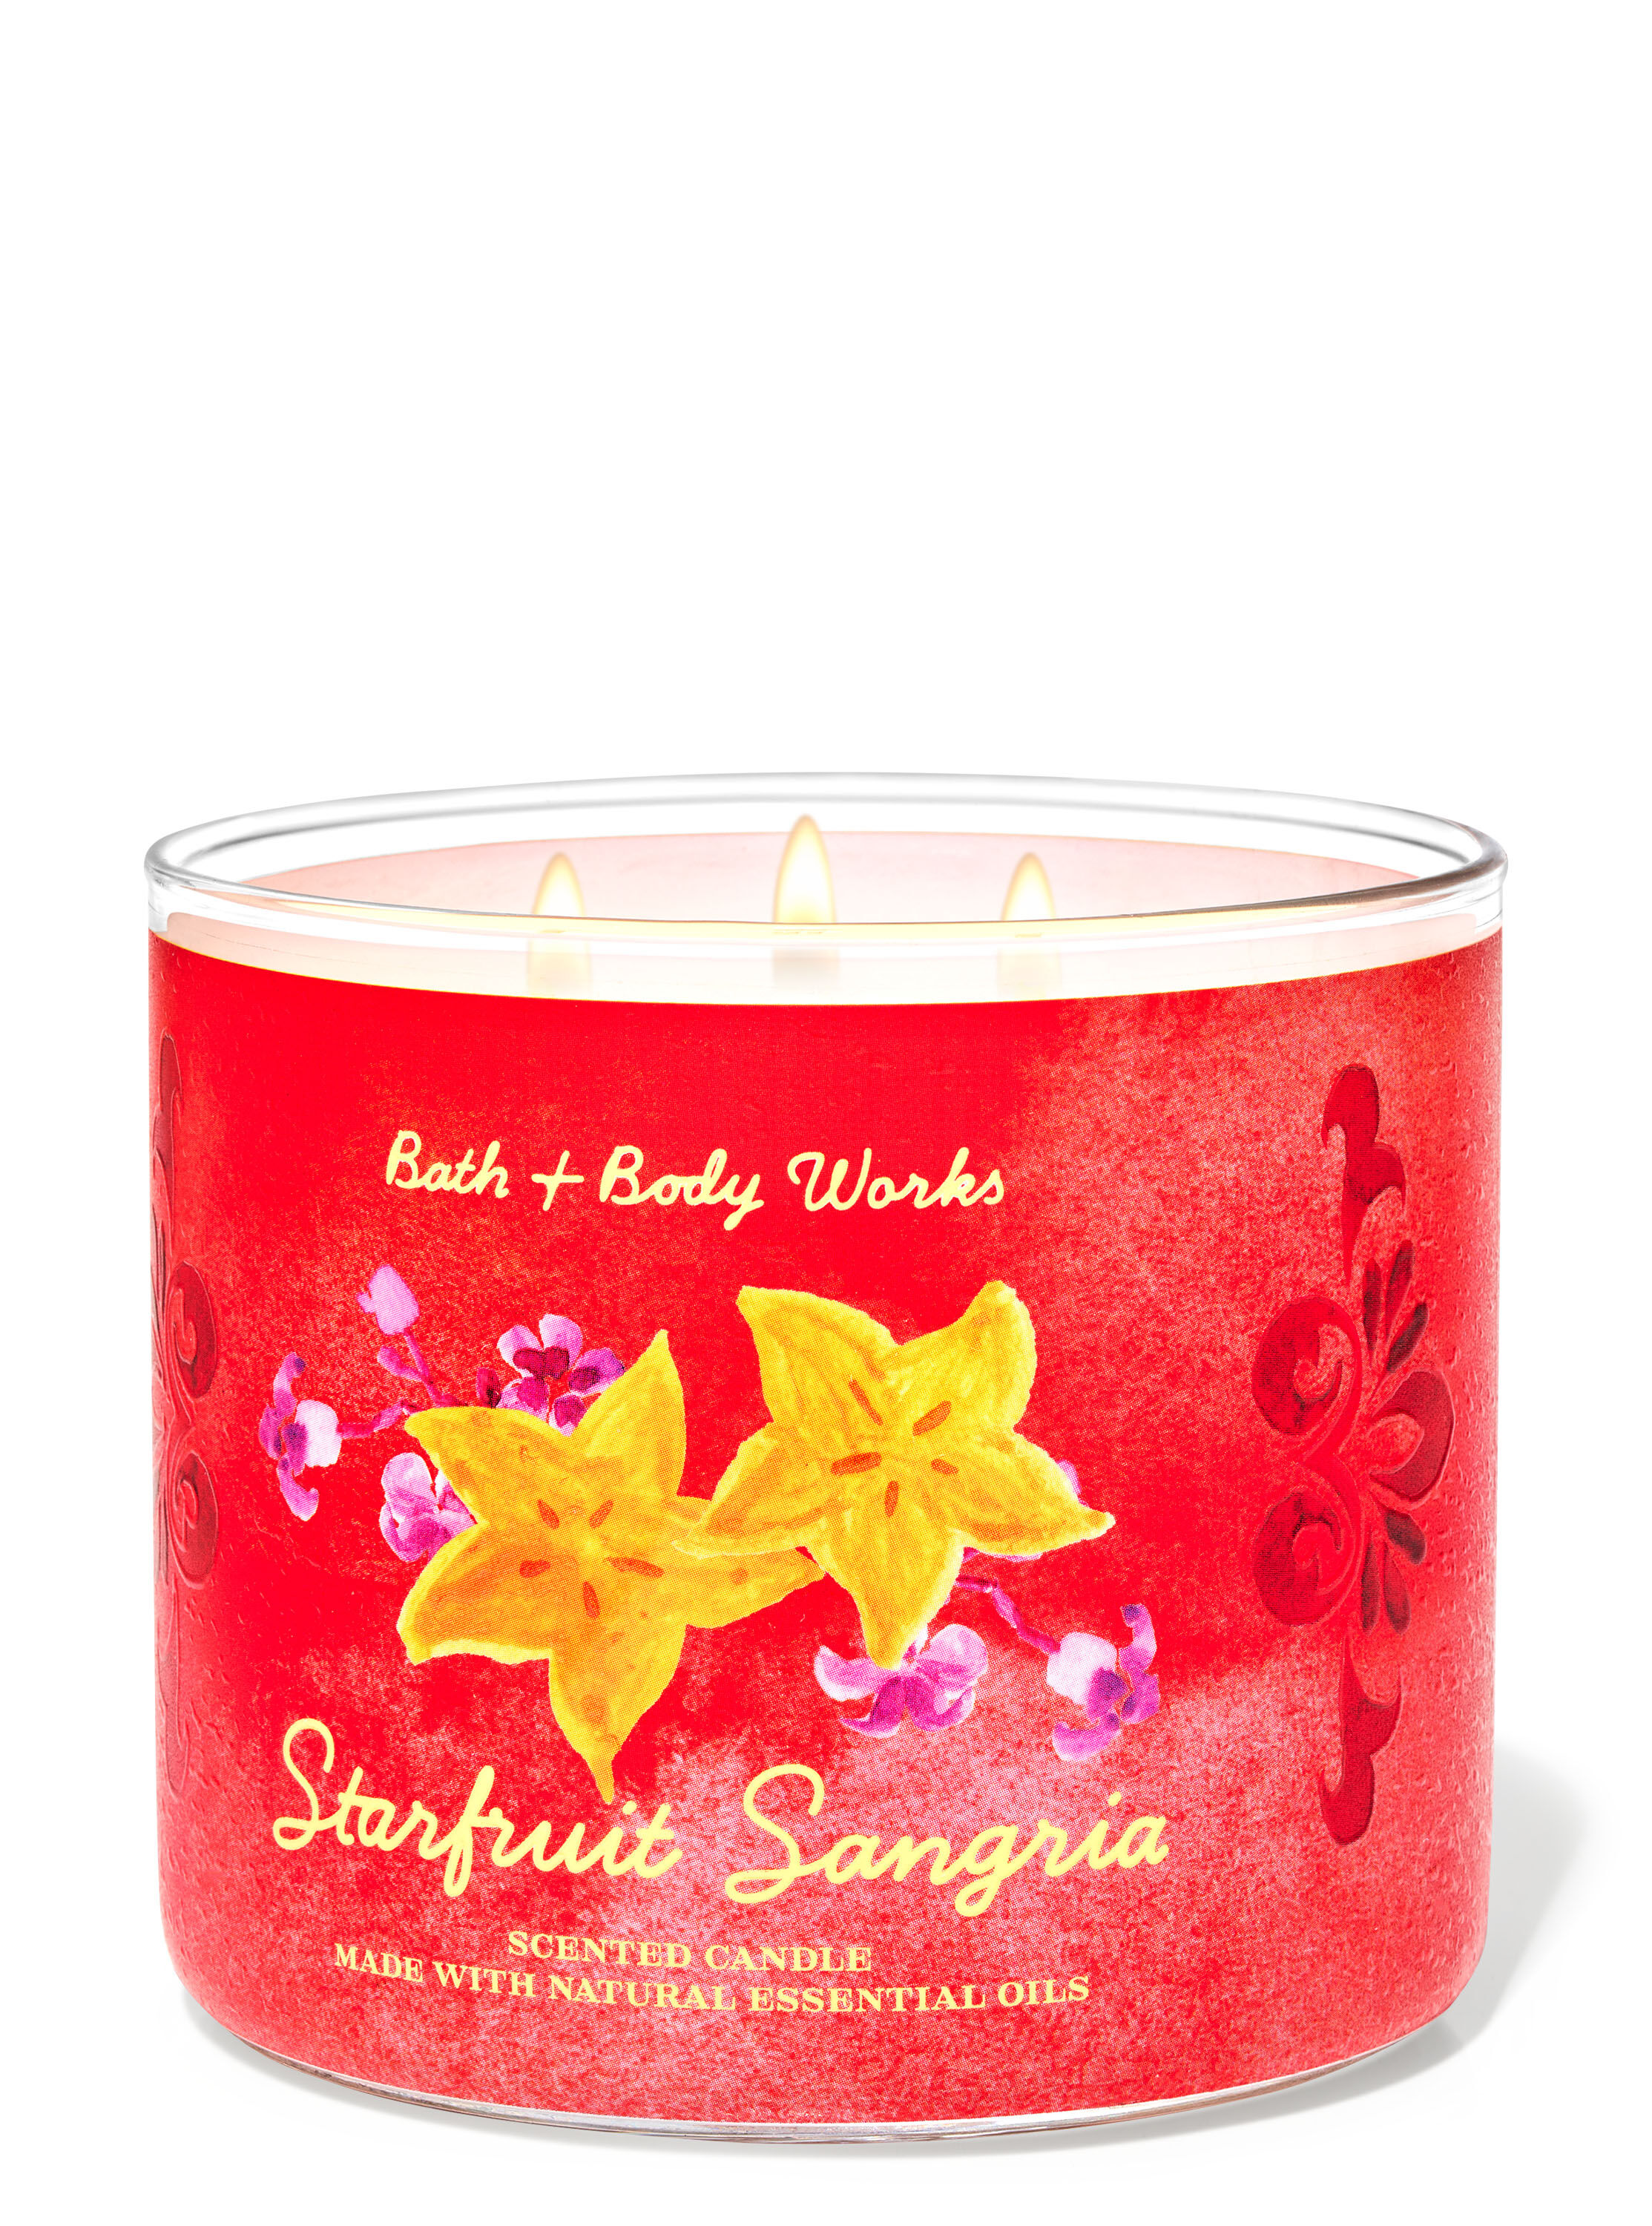 Starfruit Sangria 3-Wick Candle